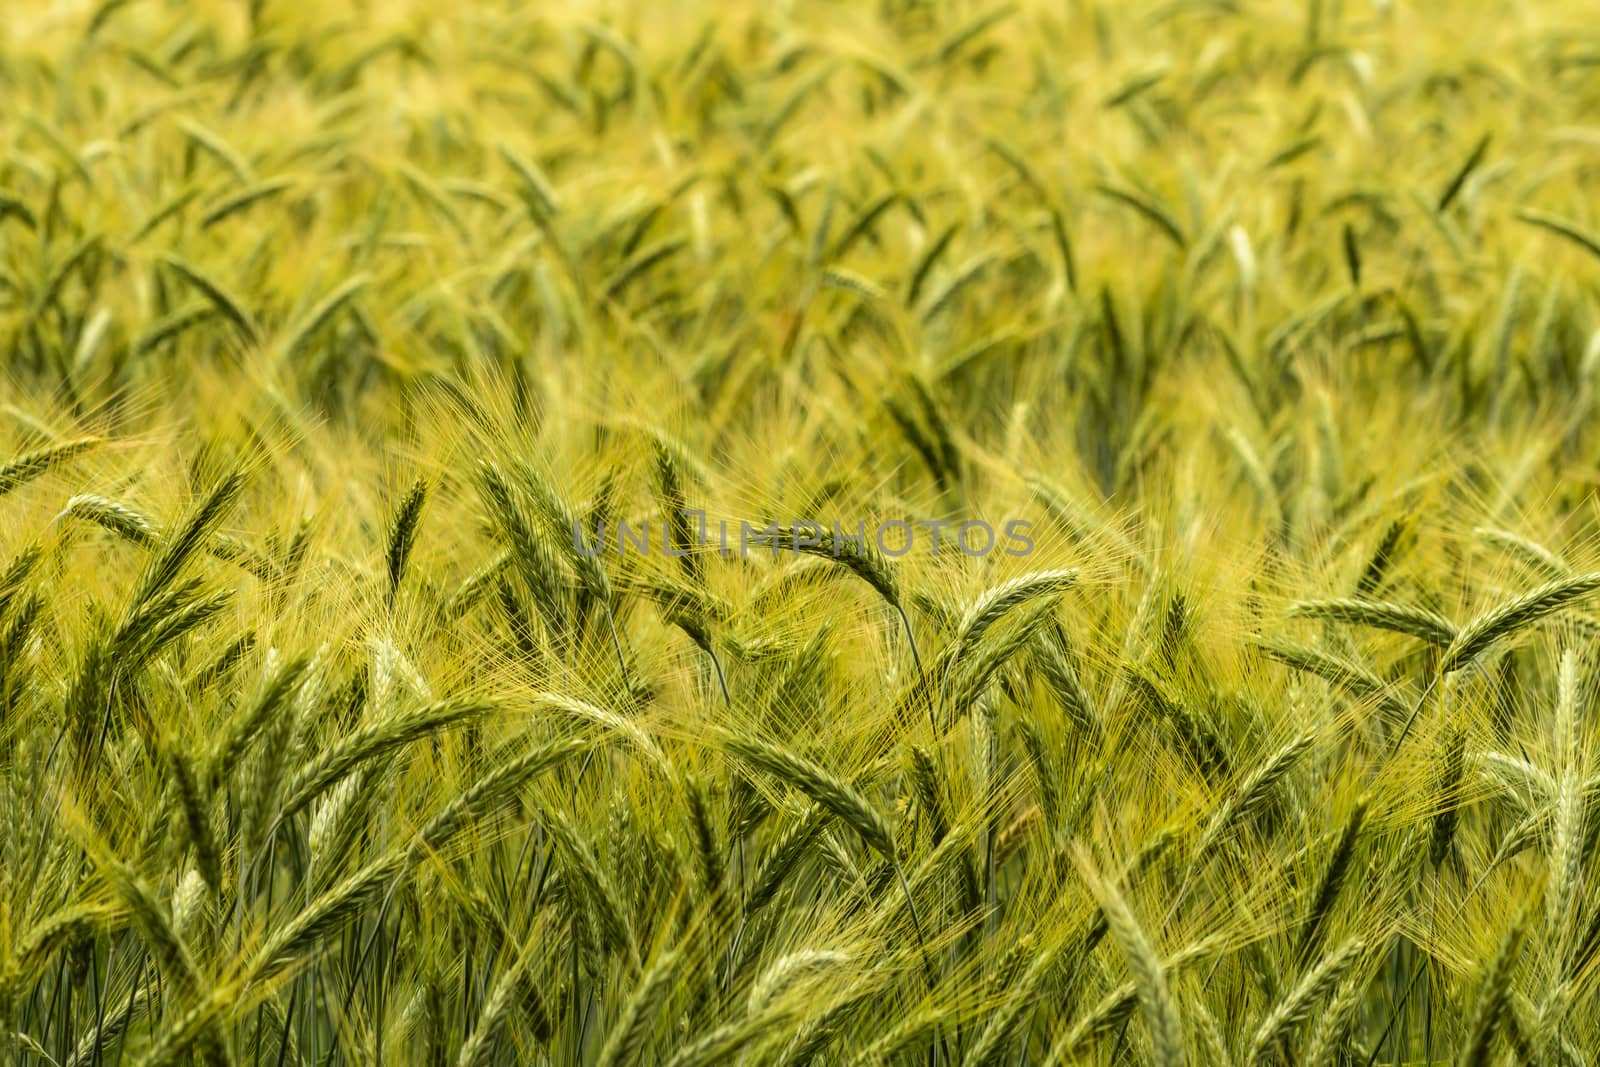 Barley in the field,